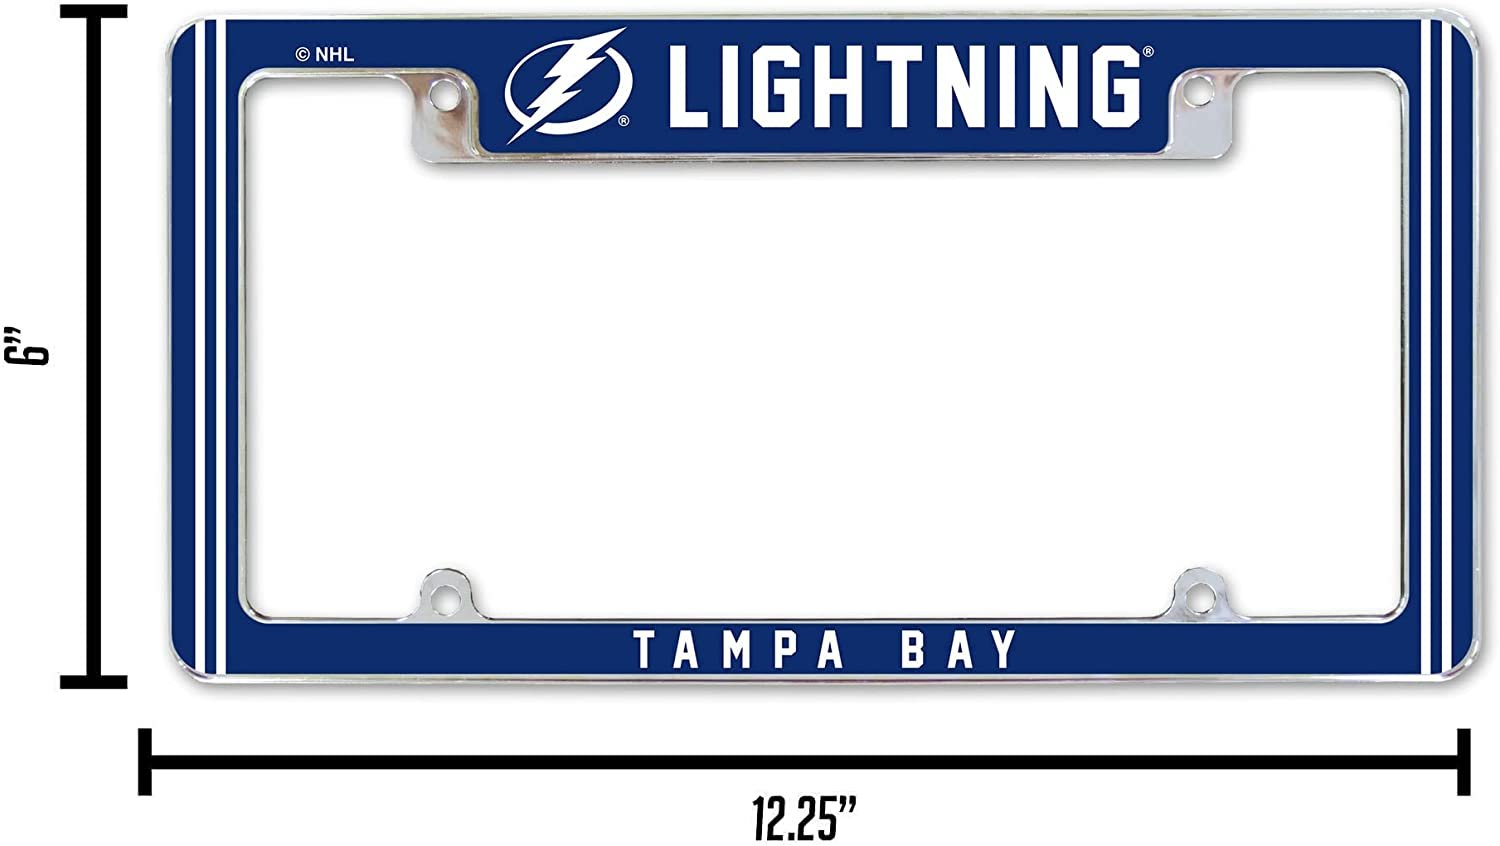 Tampa Bay Lightning Metal License Plate Frame Chrome Tag Cover Alternate Design 6x12 Inch